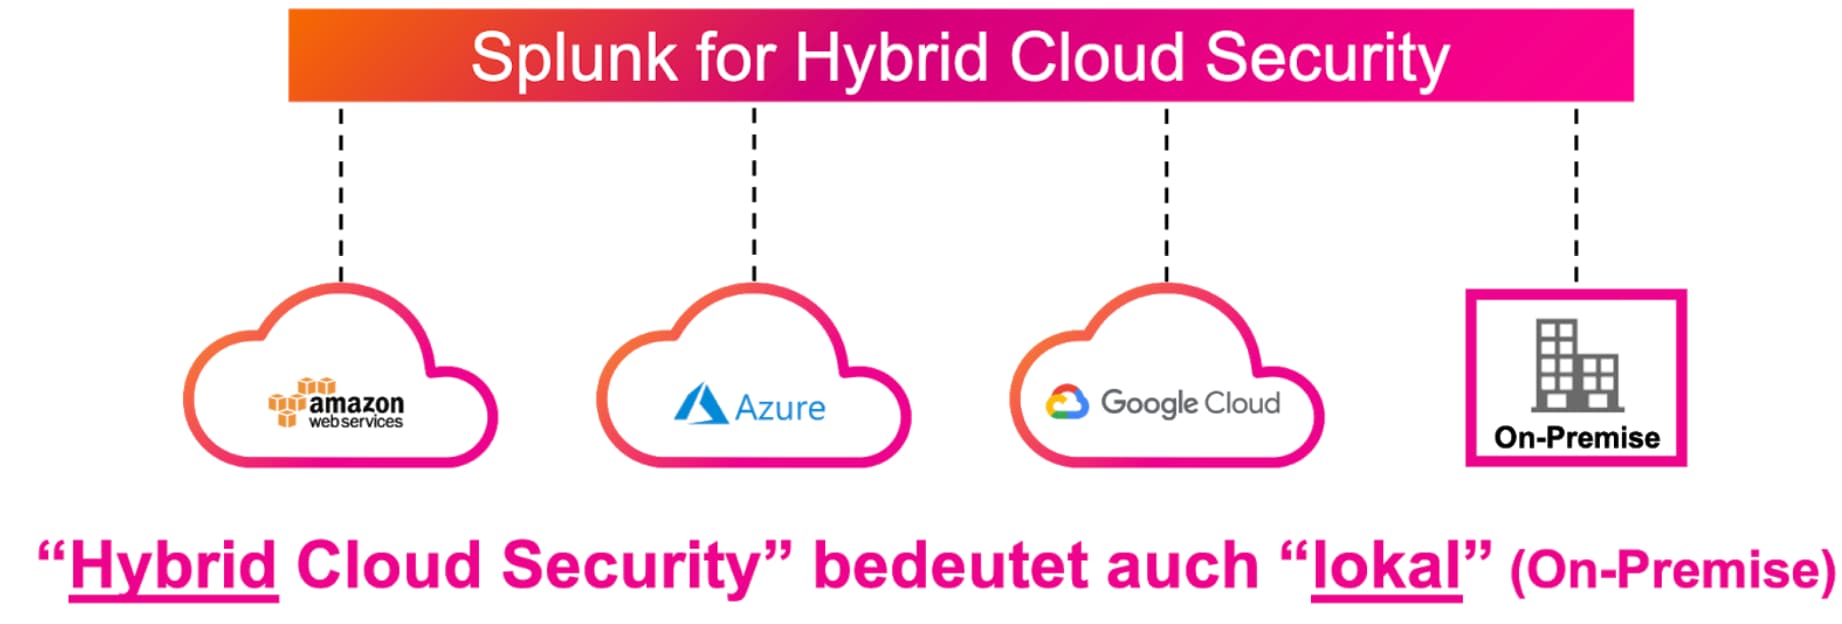 Splunk for Hybrid cloud security